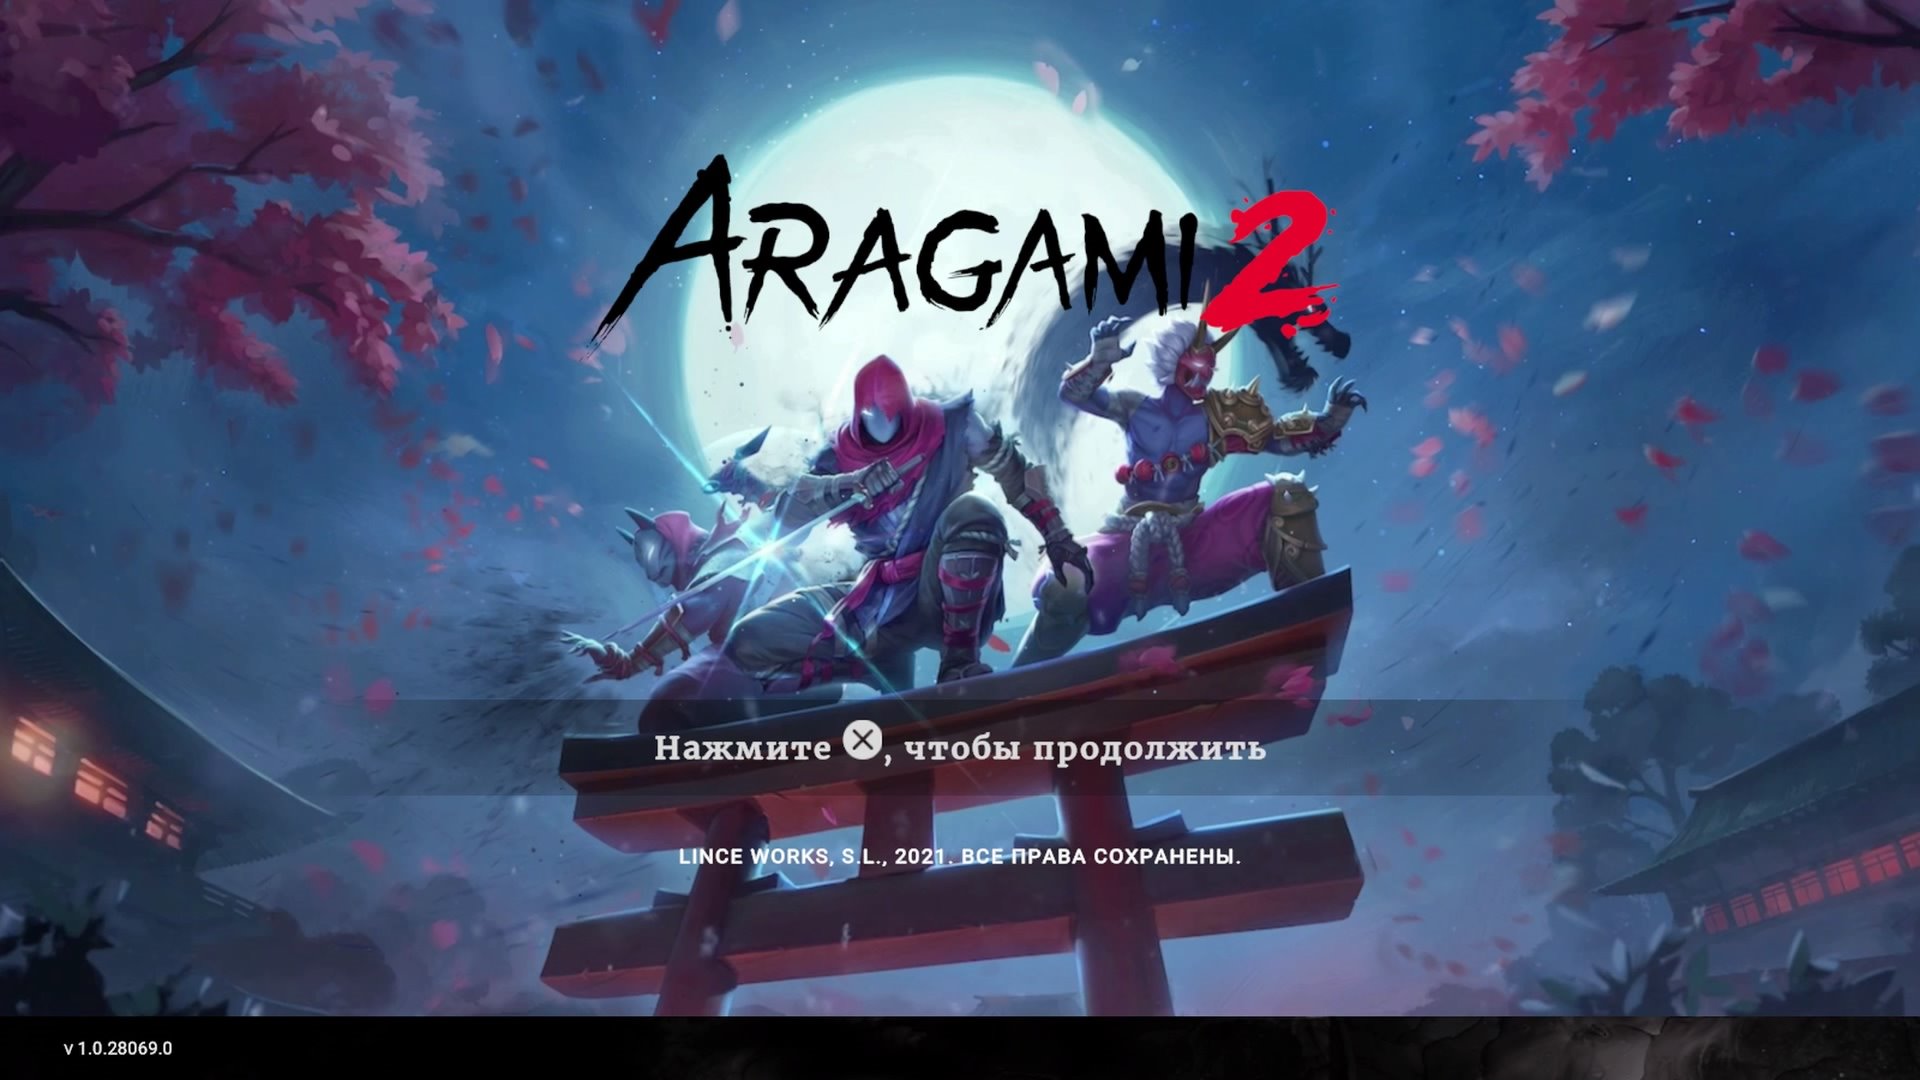 Скриншот *Aragami 2 [PS4] 5.05 / 6.72 / 7.02 / 7.55 / 9.00 [EUR] (2021) [Русский] (v1.03)*